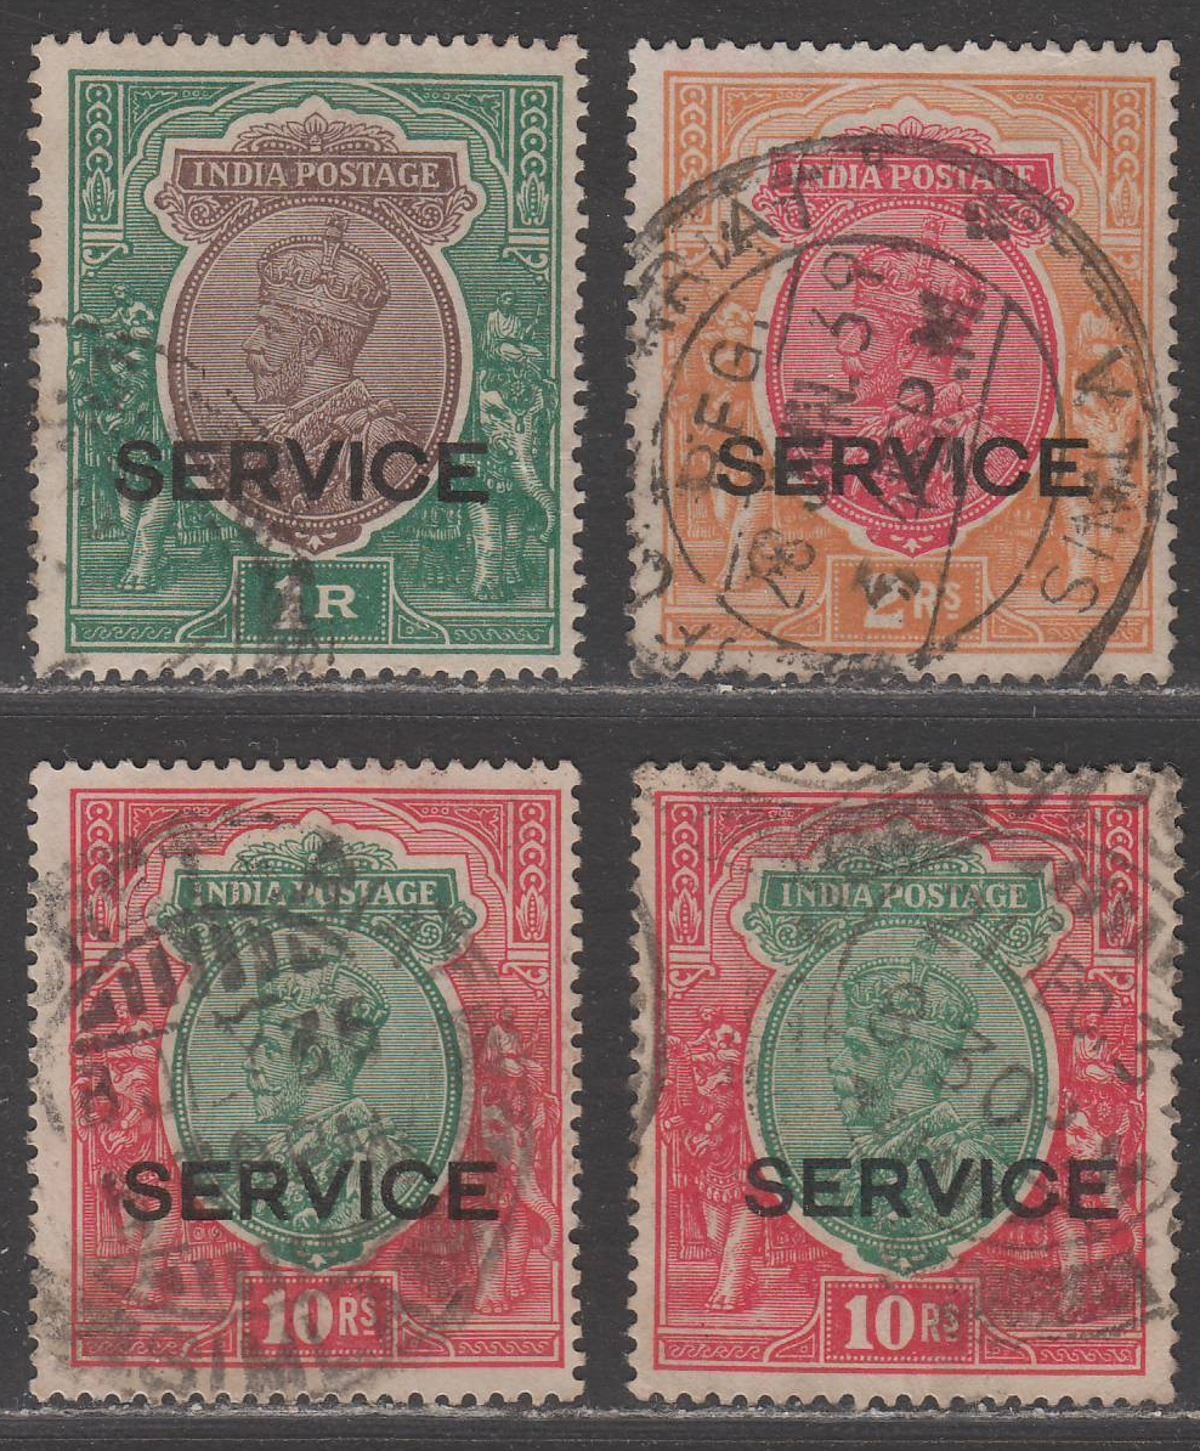 India 1930-31 KGV Official 1r, 2r, 10r, 10r Overprint Used SG O117-O120 cat £147